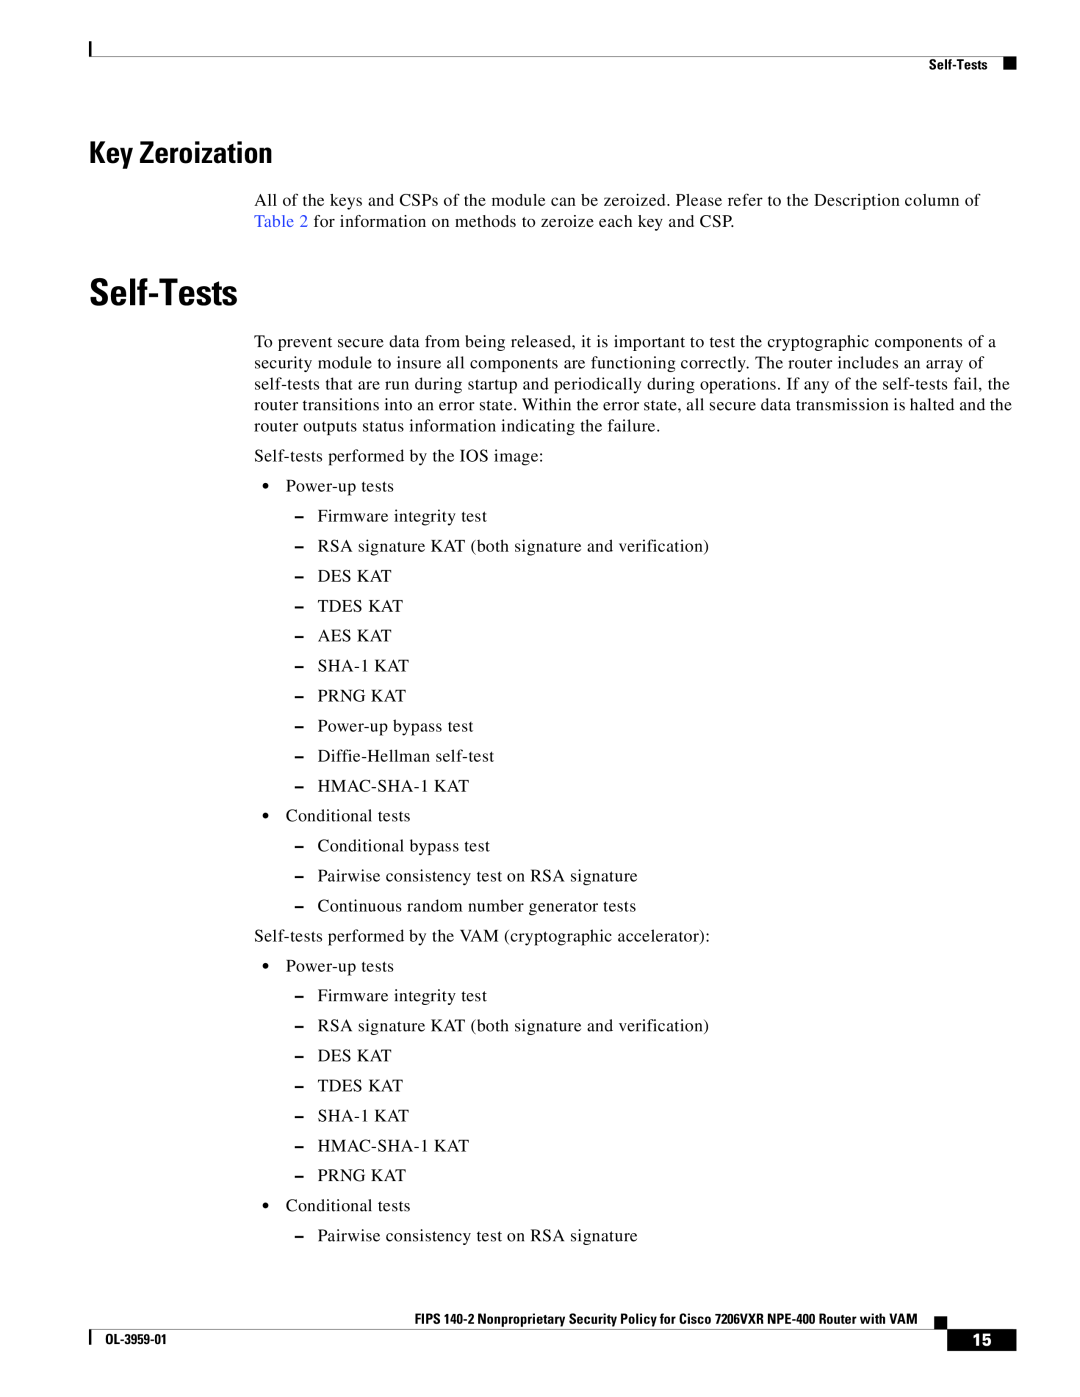 Cisco Systems 7206VXR NPE-400 manual Self-Tests, Key Zeroization 